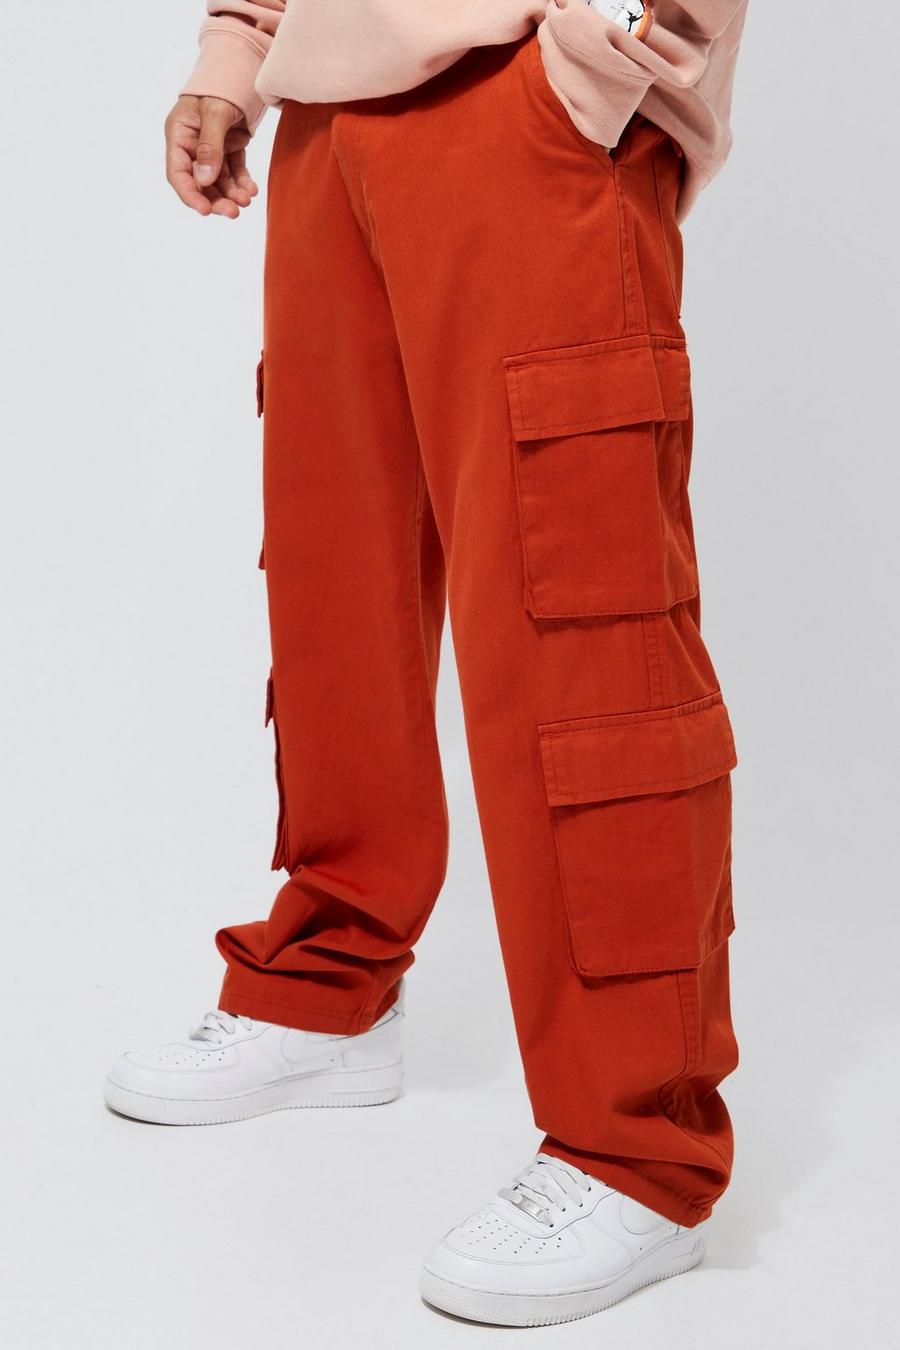 Pantalon cargo ample à poches multiples, Rust orange